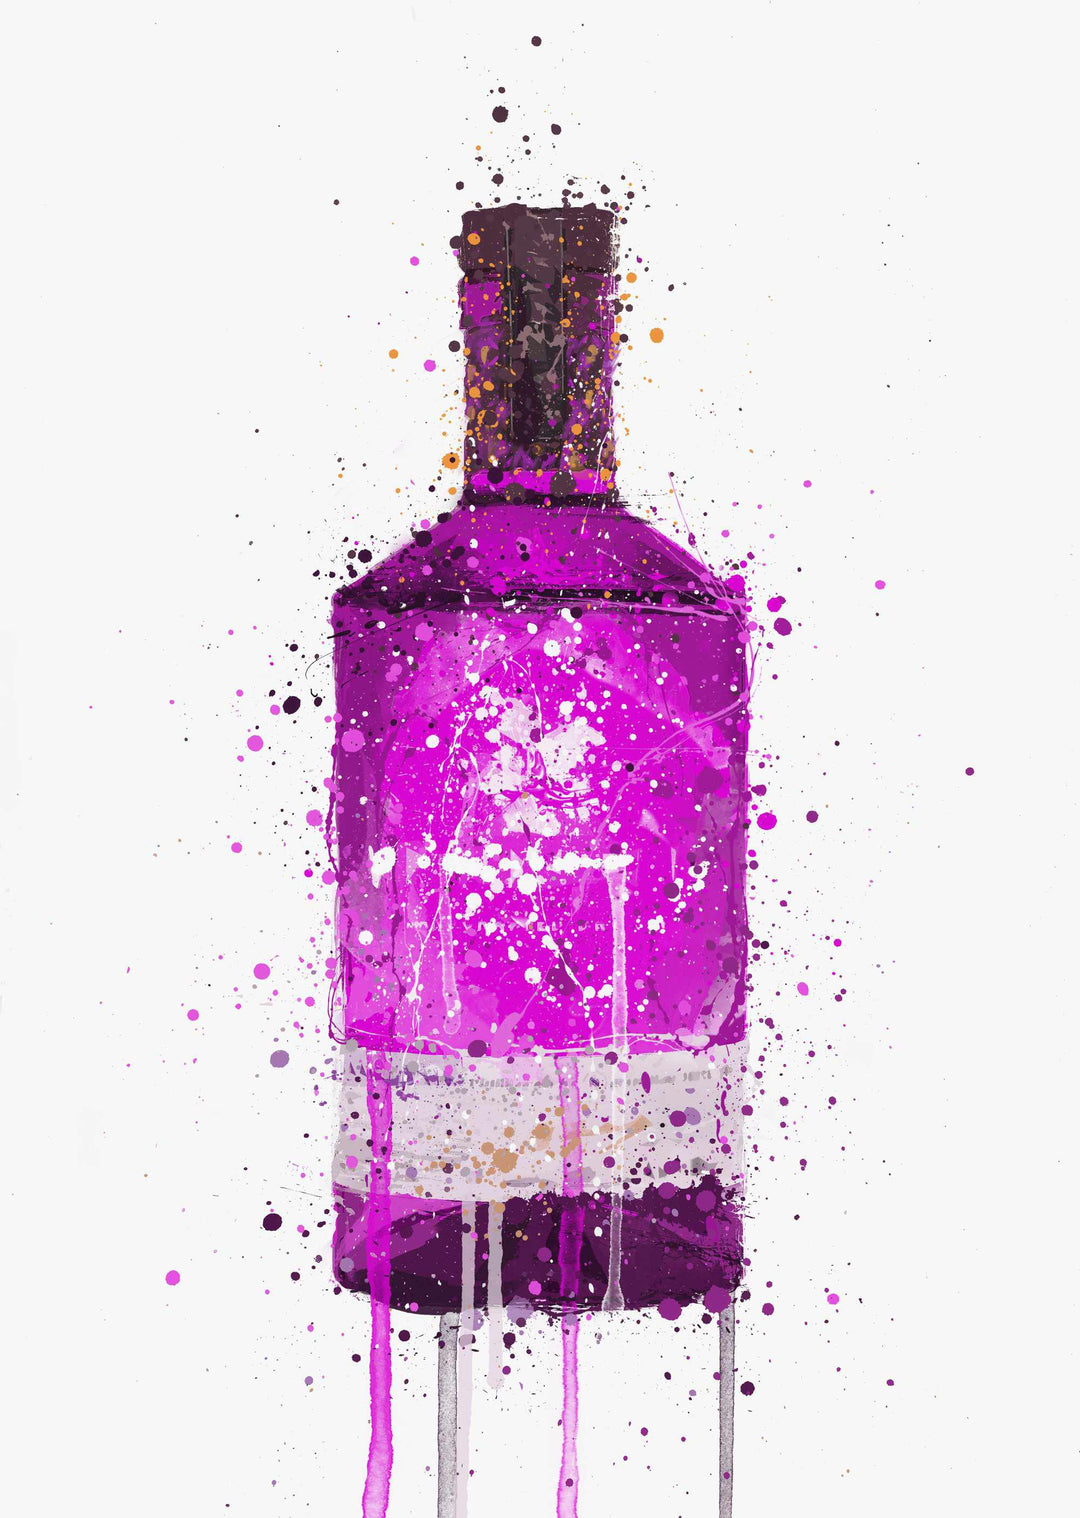 Gin Bottle Wall Art Print 'Magenta'-We Love Prints